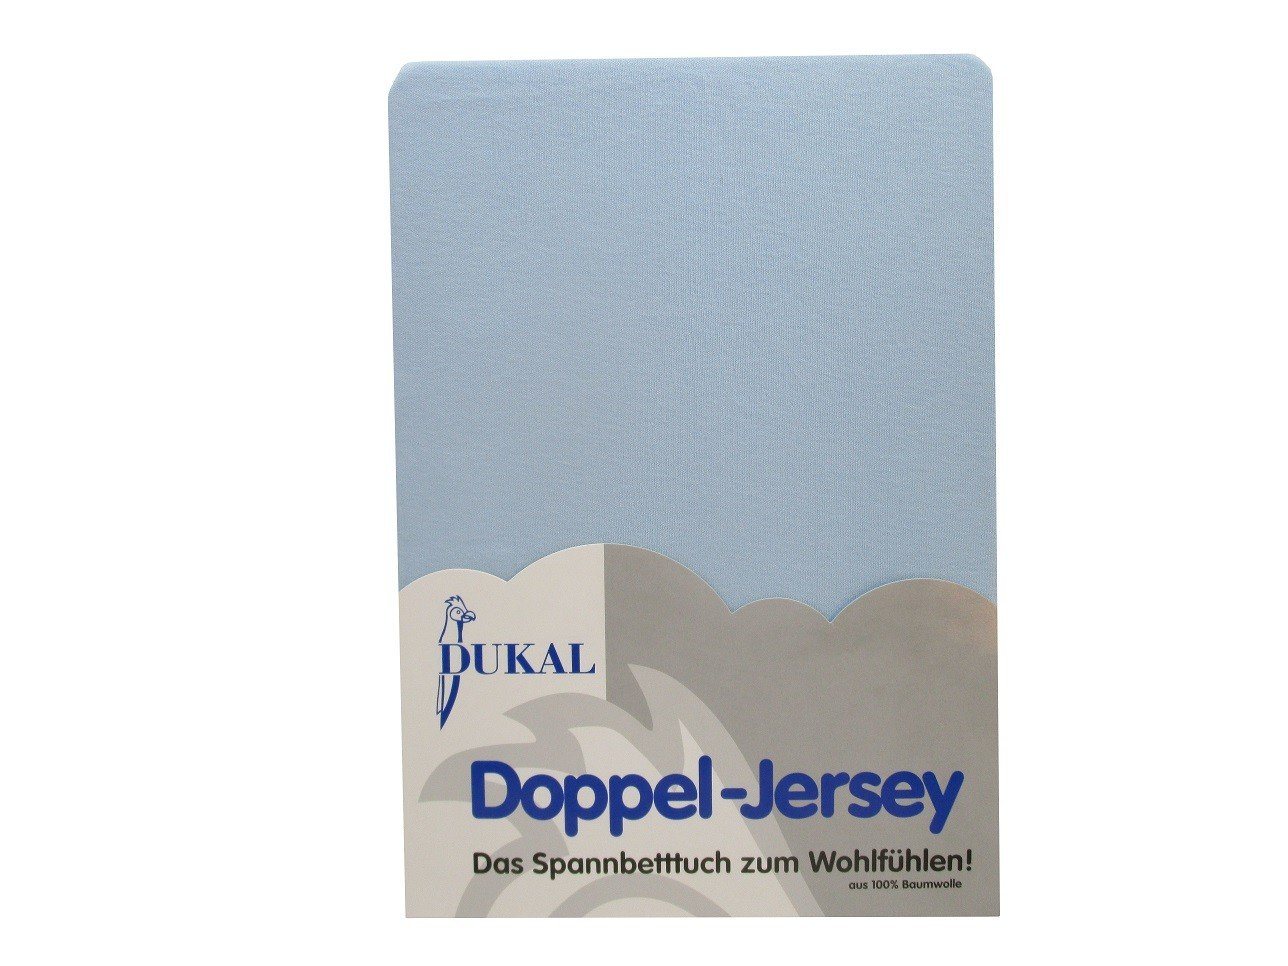 Spannbettlaken kochecht, alle Farben waschbar bei 95°C, 100% Baumwolle, DUKAL, Doppel-Jersey, Gummizug: rundum, (1 Stück), 80x200 cm, aus hochwertigem Doppel-Jersey, Made in Germany von DUKAL